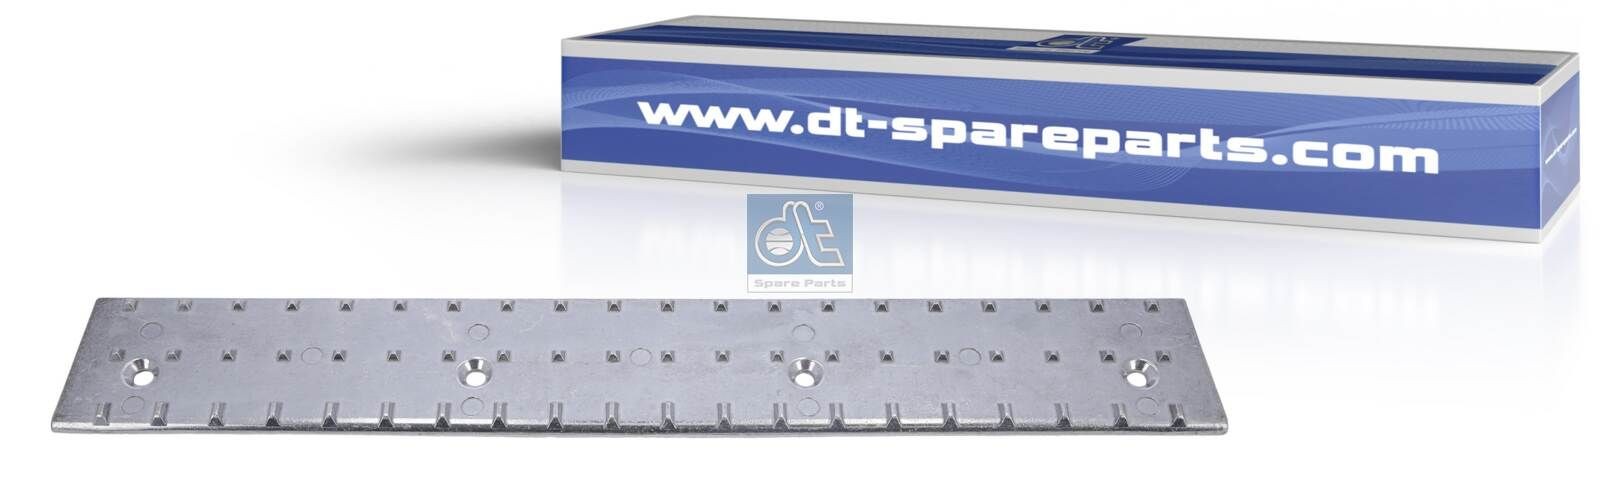 5.16094 DT Spare Parts Trittbrett DAF XF 95